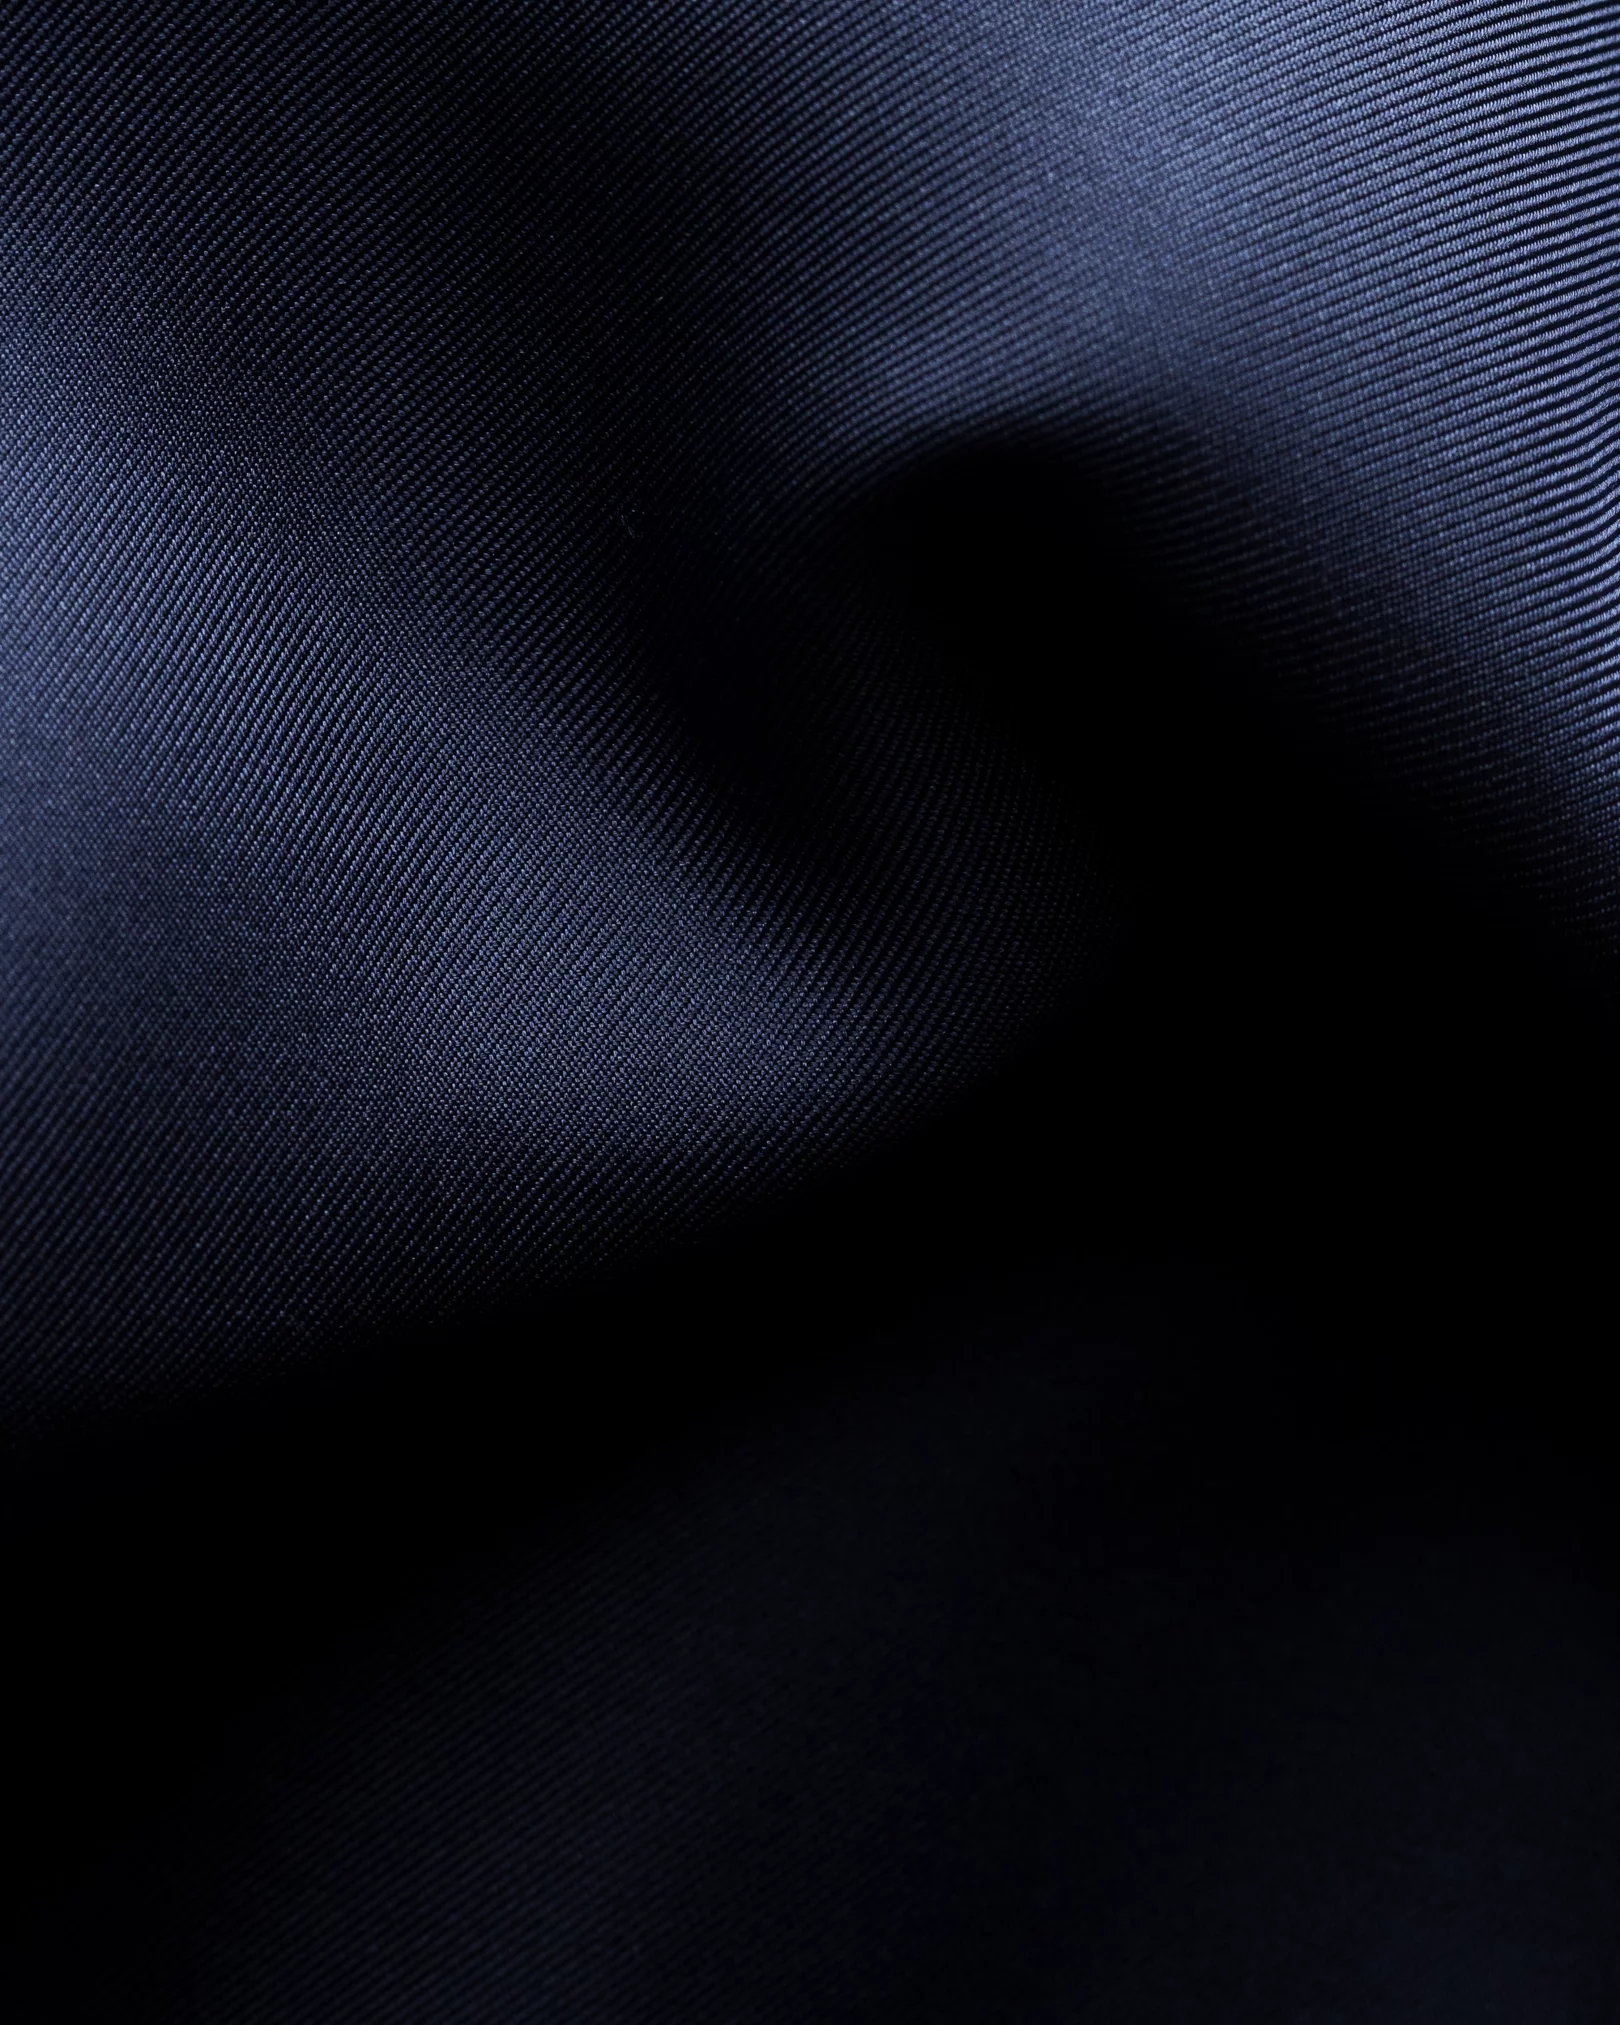 Eton - dark blue silk twill evening shirt pointed single rounded slim soft